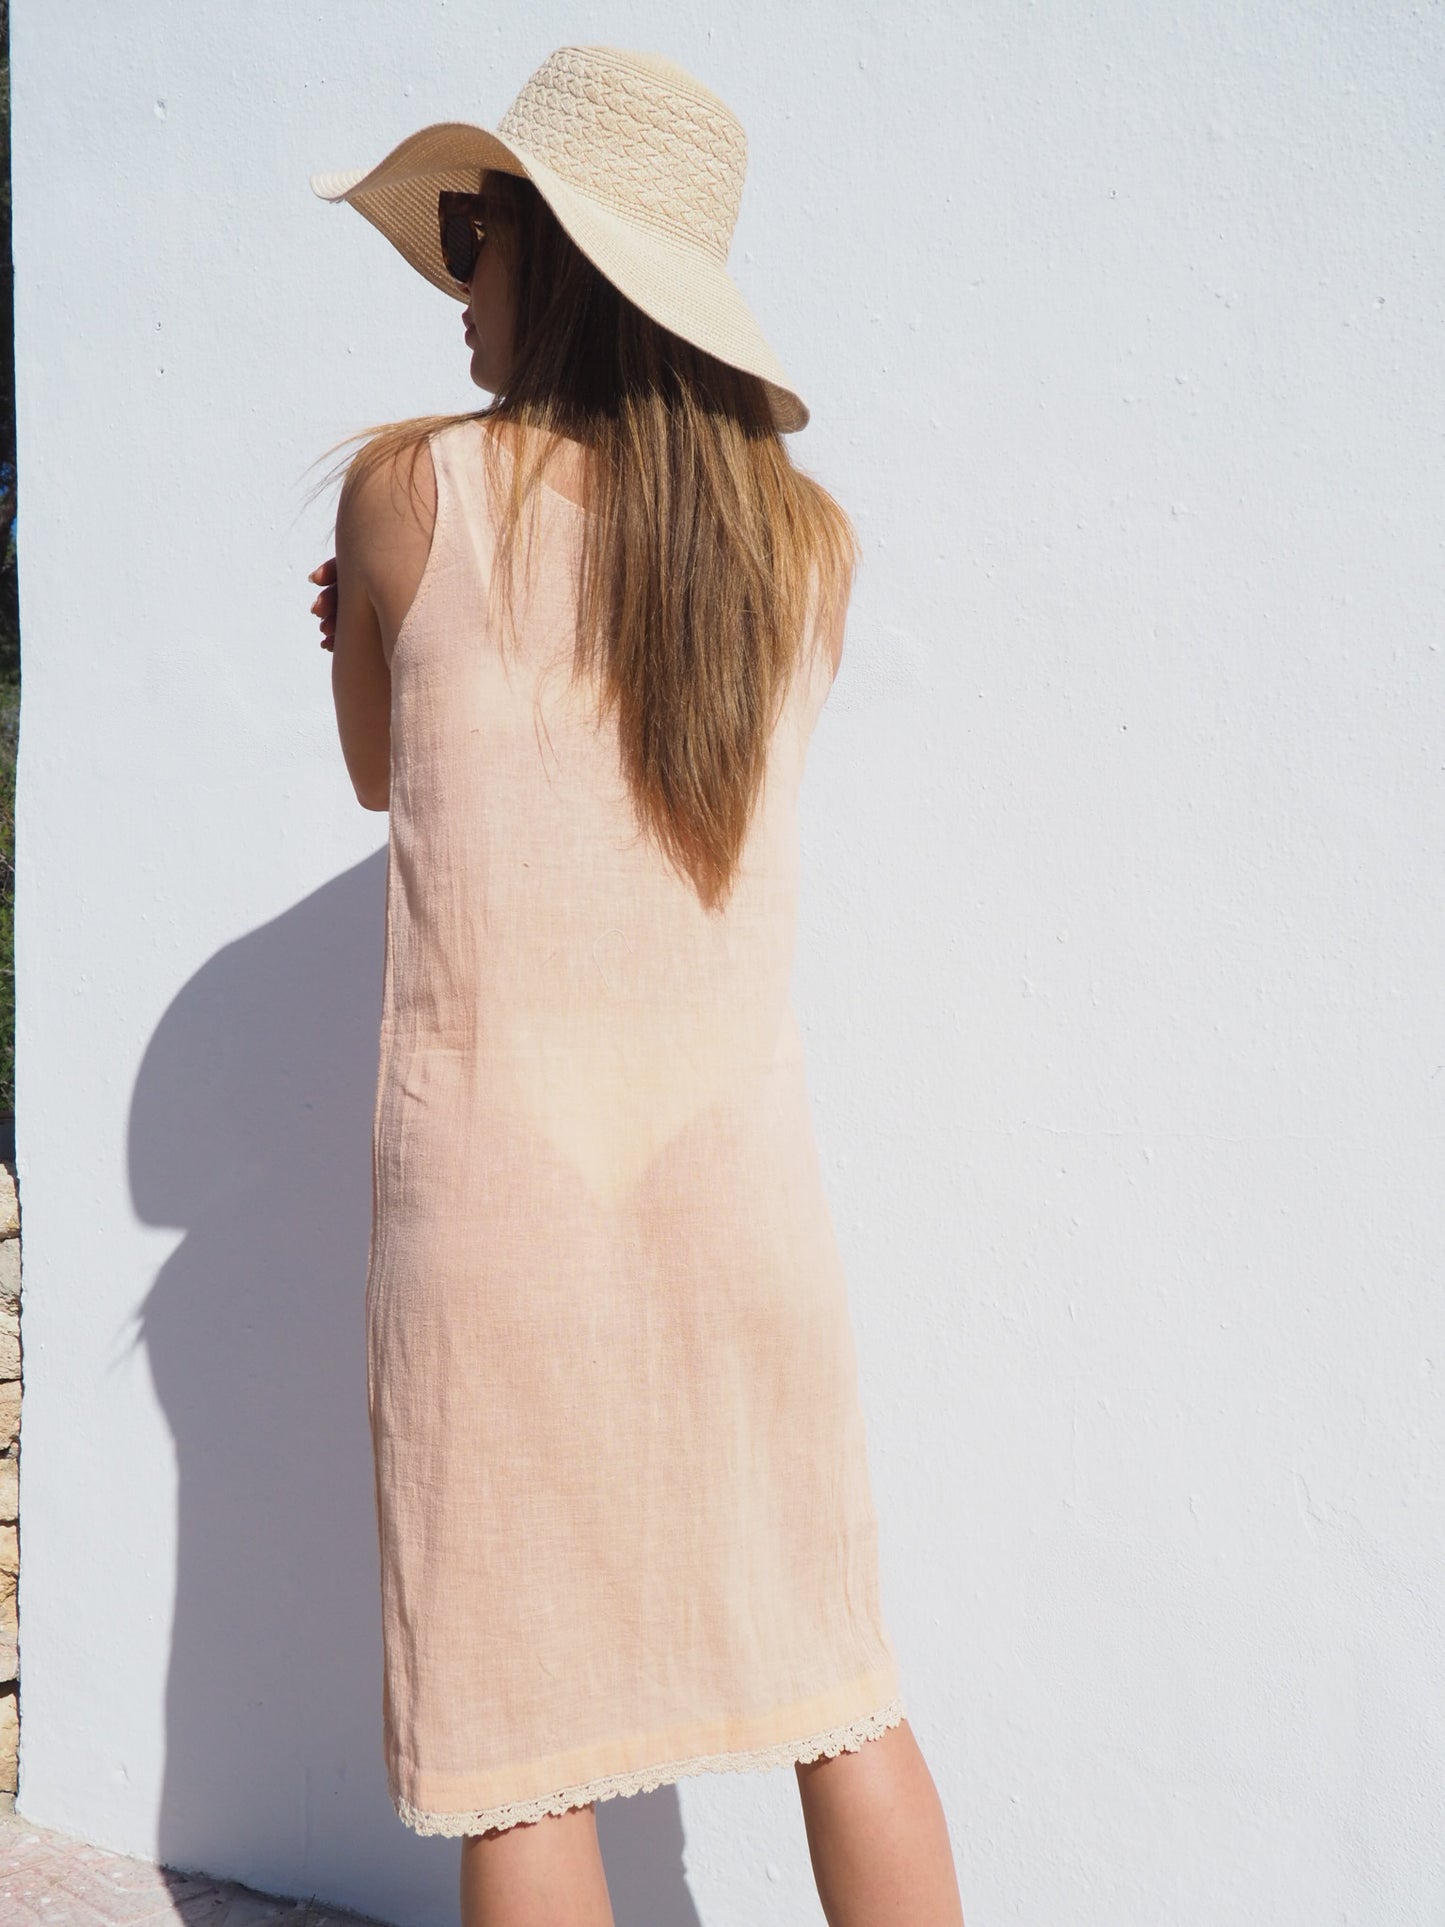 Vintage cotton slip dress in pale pink